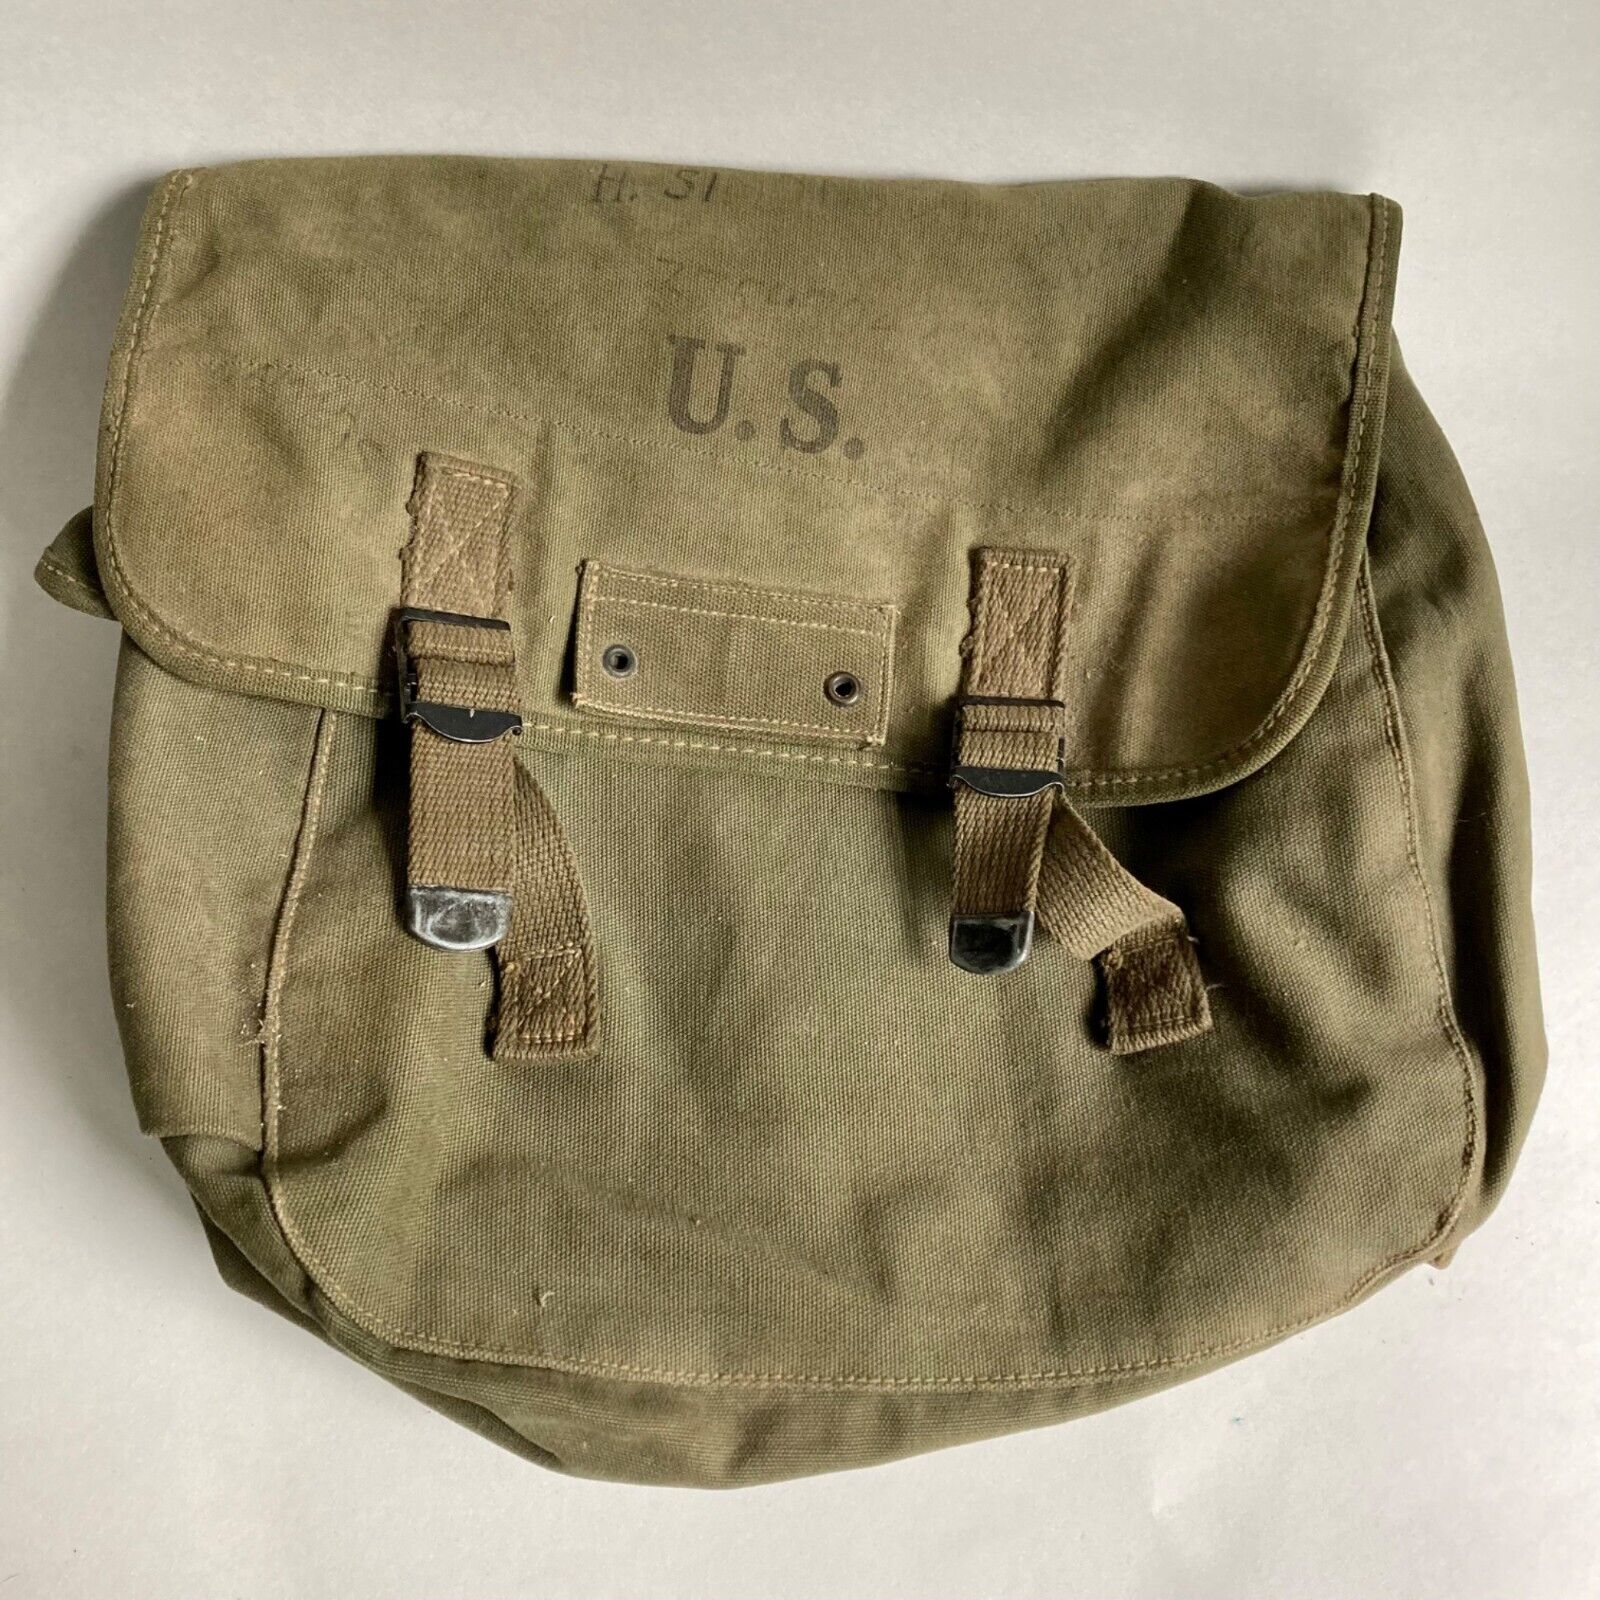 Vintage U.S. Army WWII Field Bag Canvas Map Case Stamped 1945 Myrna Shoe Inc.